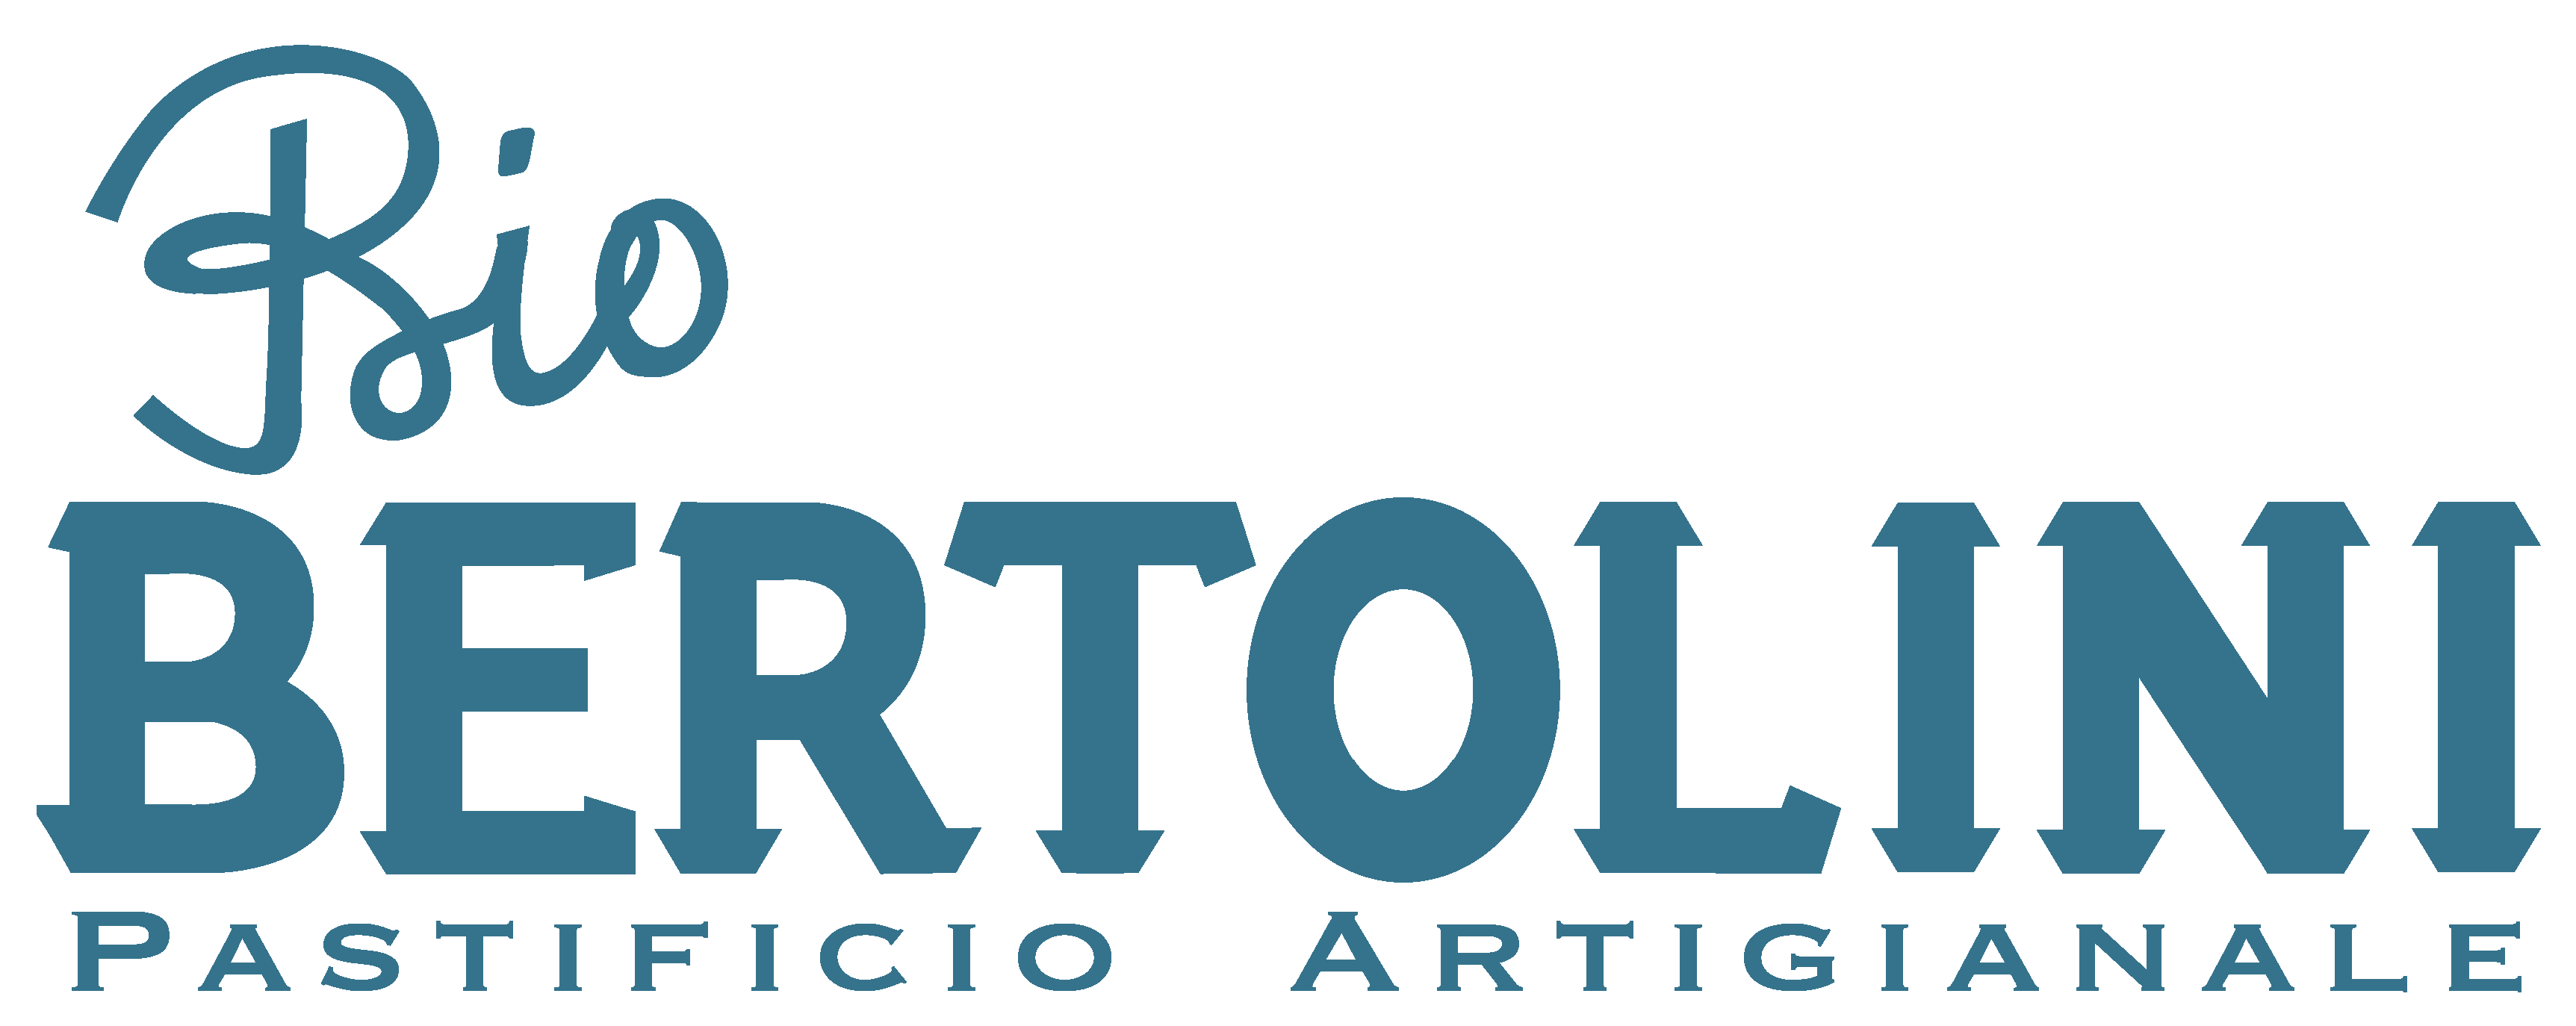 Rio Bertolini Pastificio Artigianale Logo